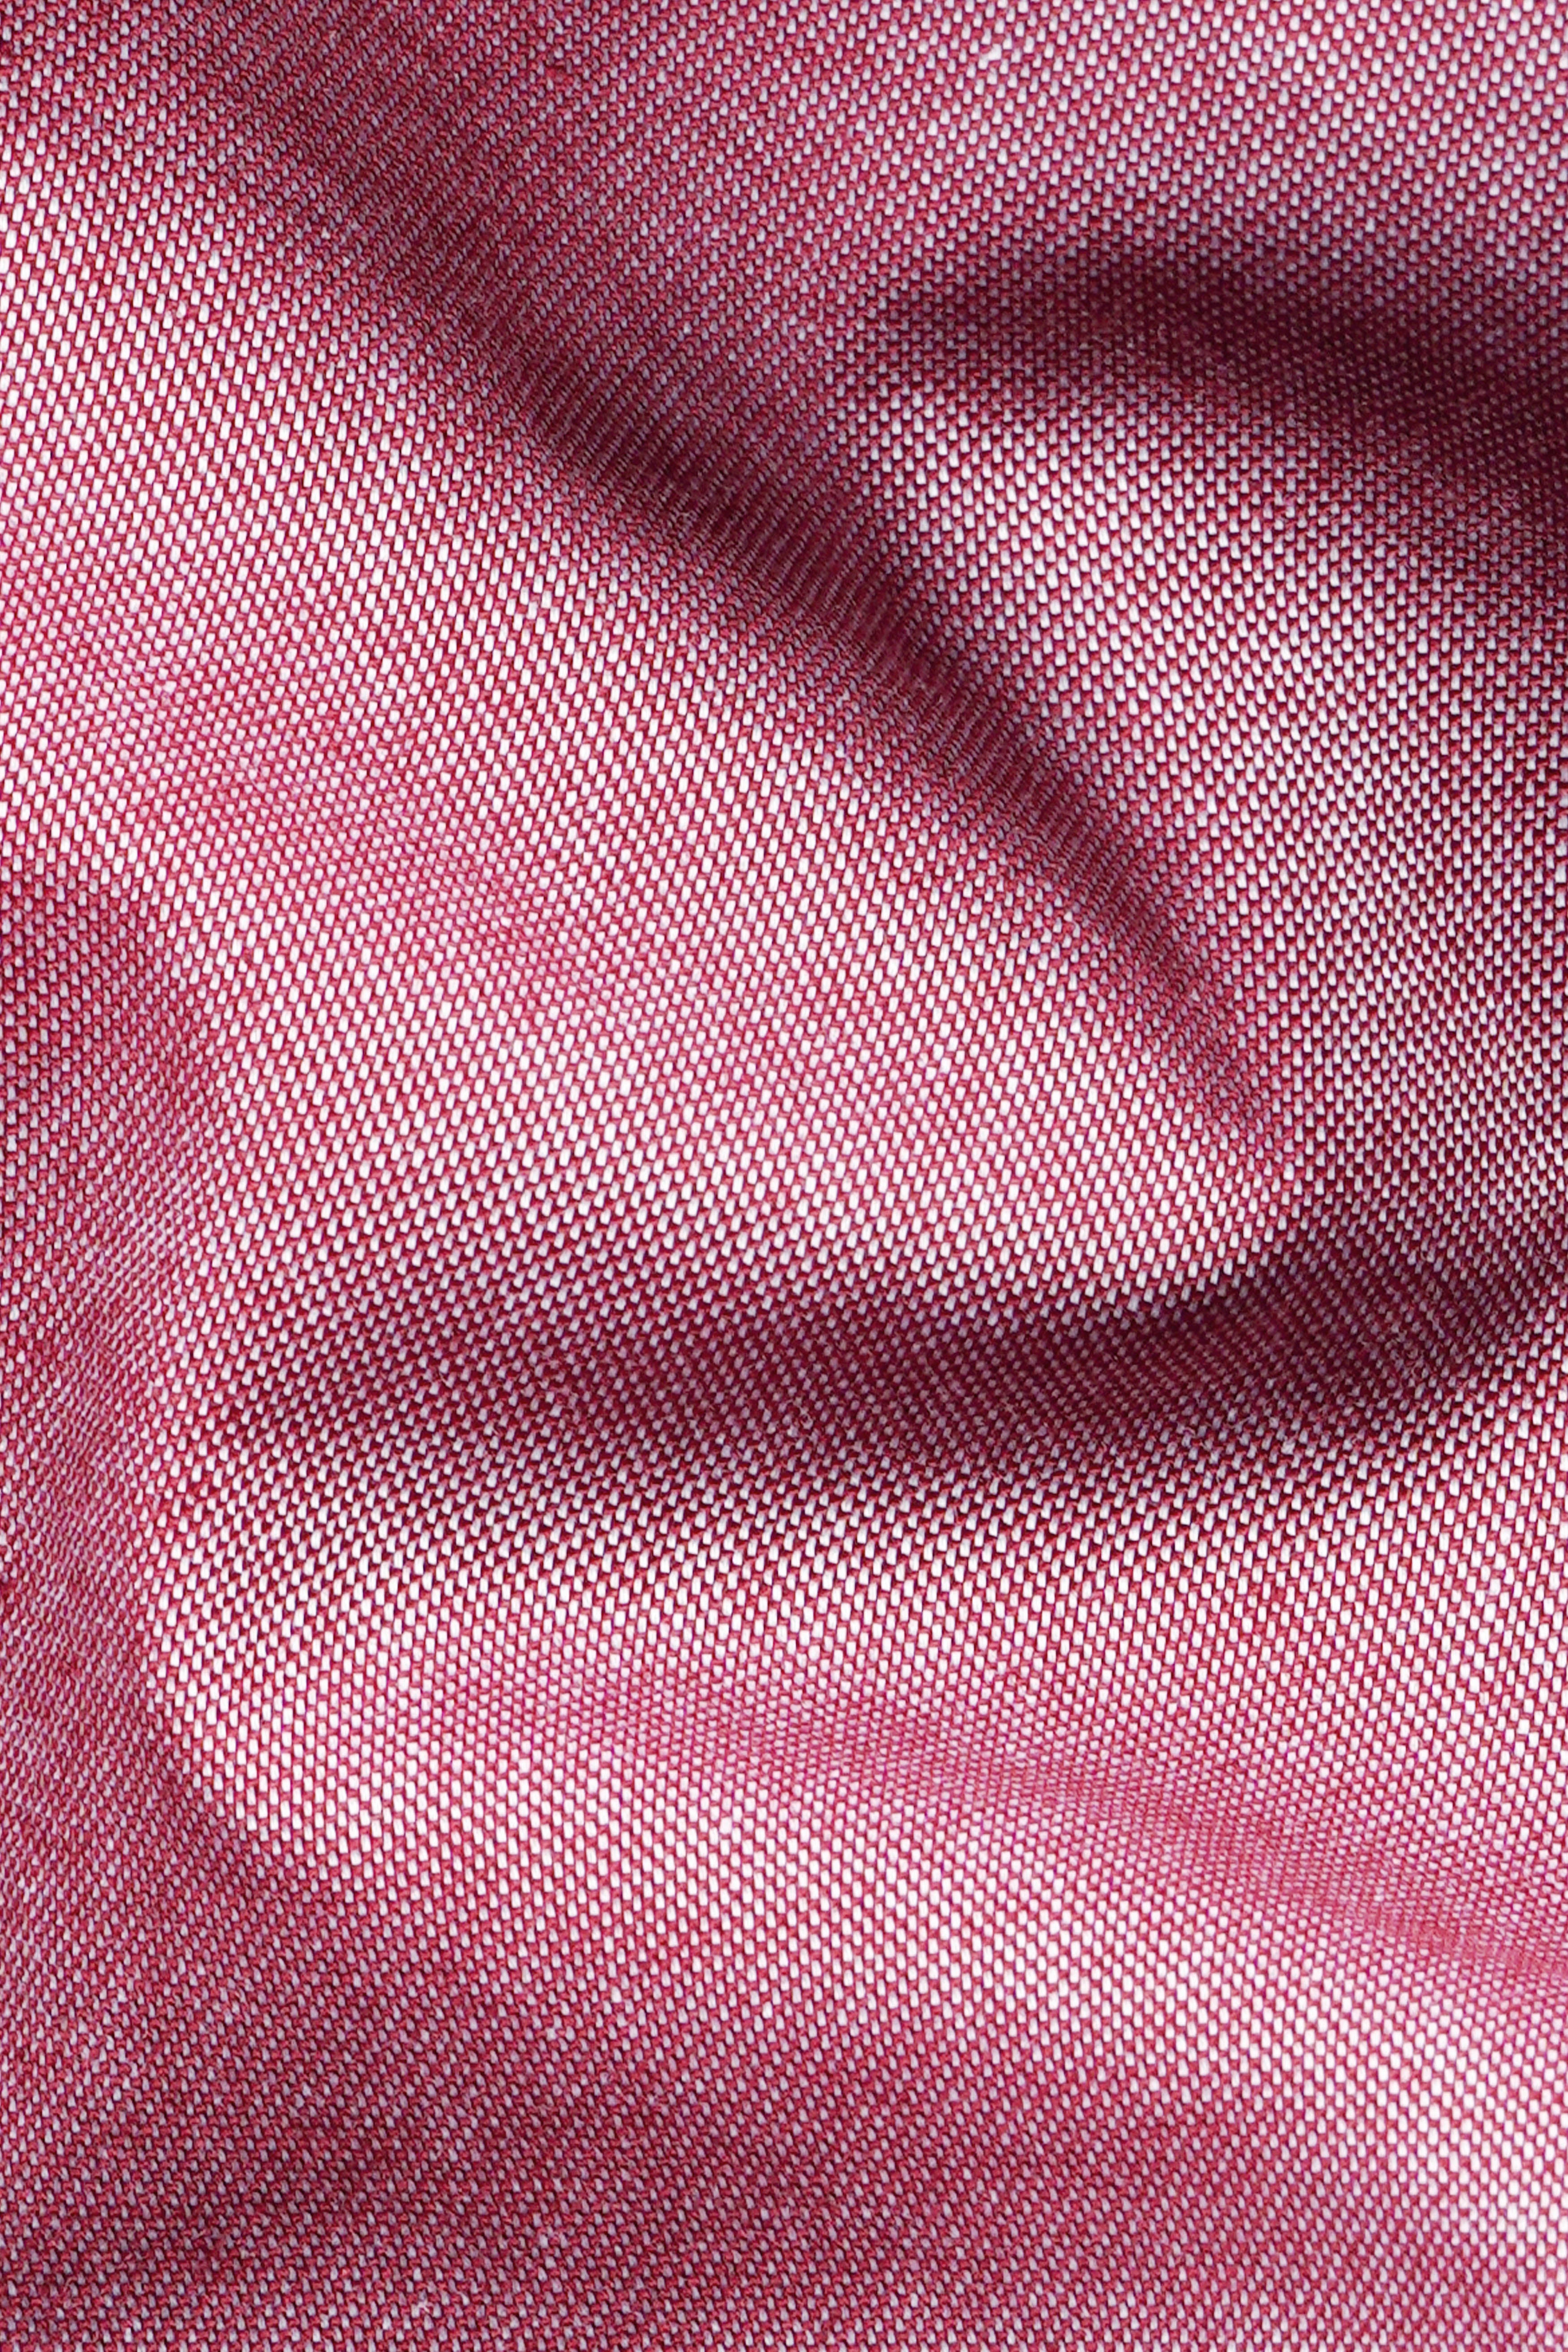 Contessa Pink and White Hand Painted Royal Oxford Designer Shirt 6455-BD-P310-ART-38, 6455-BD-P310-ART-H-38, 6455-BD-P310-ART-39, 6455-BD-P310-ART-H-39, 6455-BD-P310-ART-40, 6455-BD-P310-ART-H-40, 6455-BD-P310-ART-42, 6455-BD-P310-ART-H-42, 6455-BD-P310-ART-44, 6455-BD-P310-ART-H-44, 6455-BD-P310-ART-46, 6455-BD-P310-ART-H-46, 6455-BD-P310-ART-48, 6455-BD-P310-ART-H-48, 6455-BD-P310-ART-50, 6455-BD-P310-ART-H-50, 6455-BD-P310-ART-52, 6455-BD-P310-ART-H-52